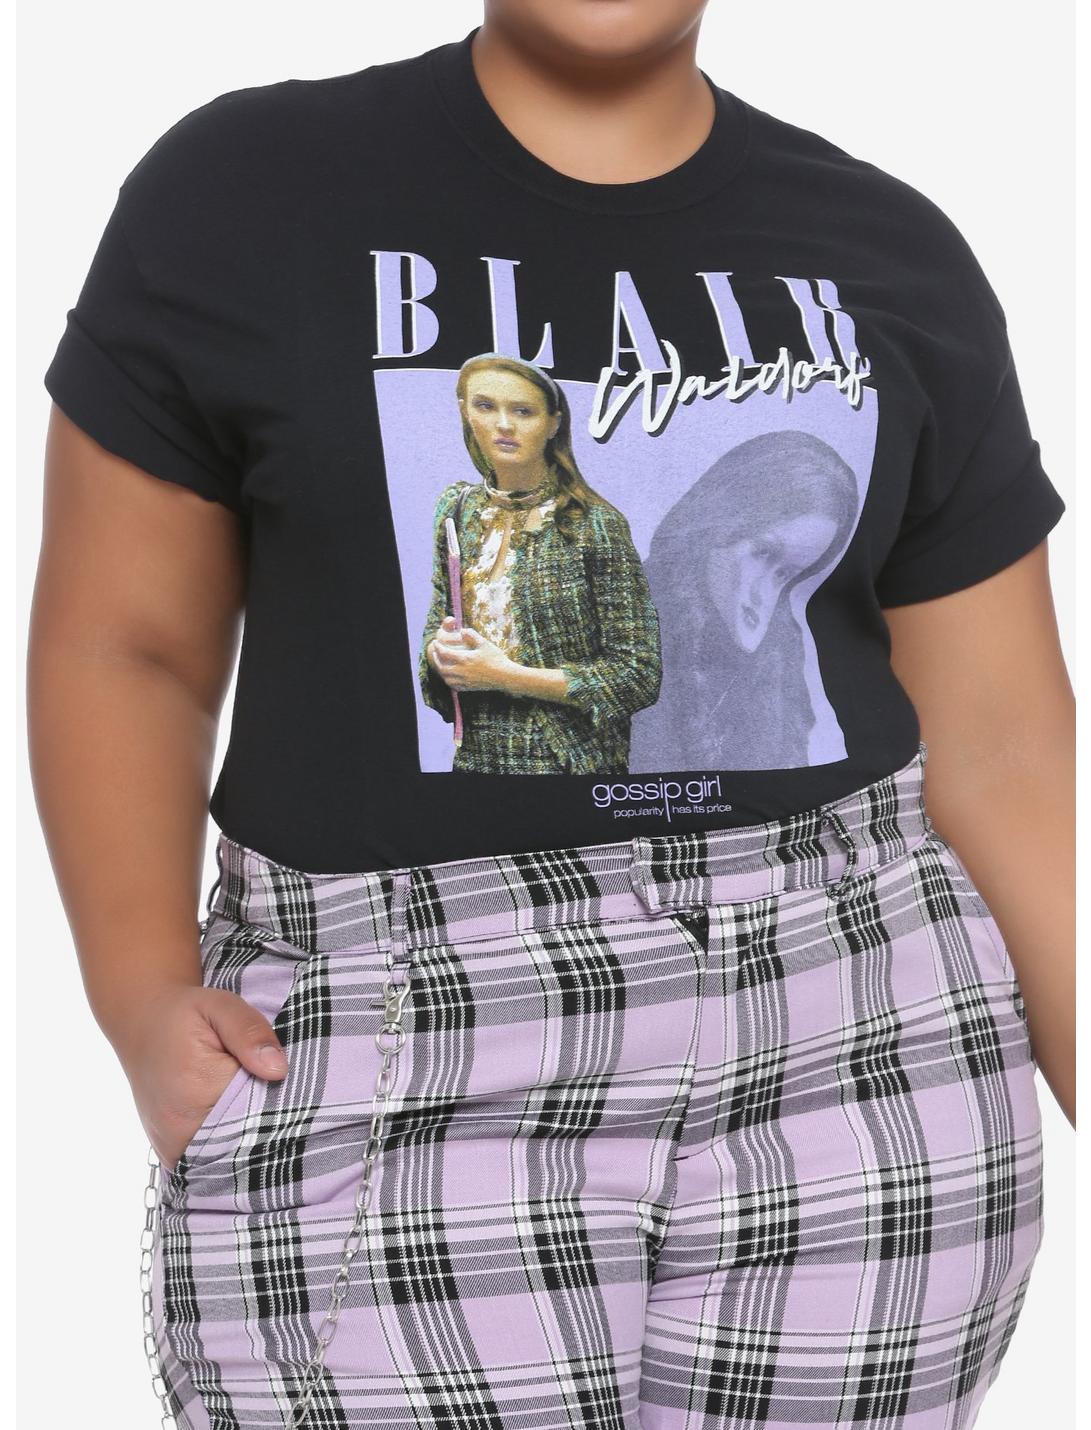 Gossip Girl Blair Waldorf Boyfriend Fit Girls T-Shirt Plus Size, MULTI, hi-res